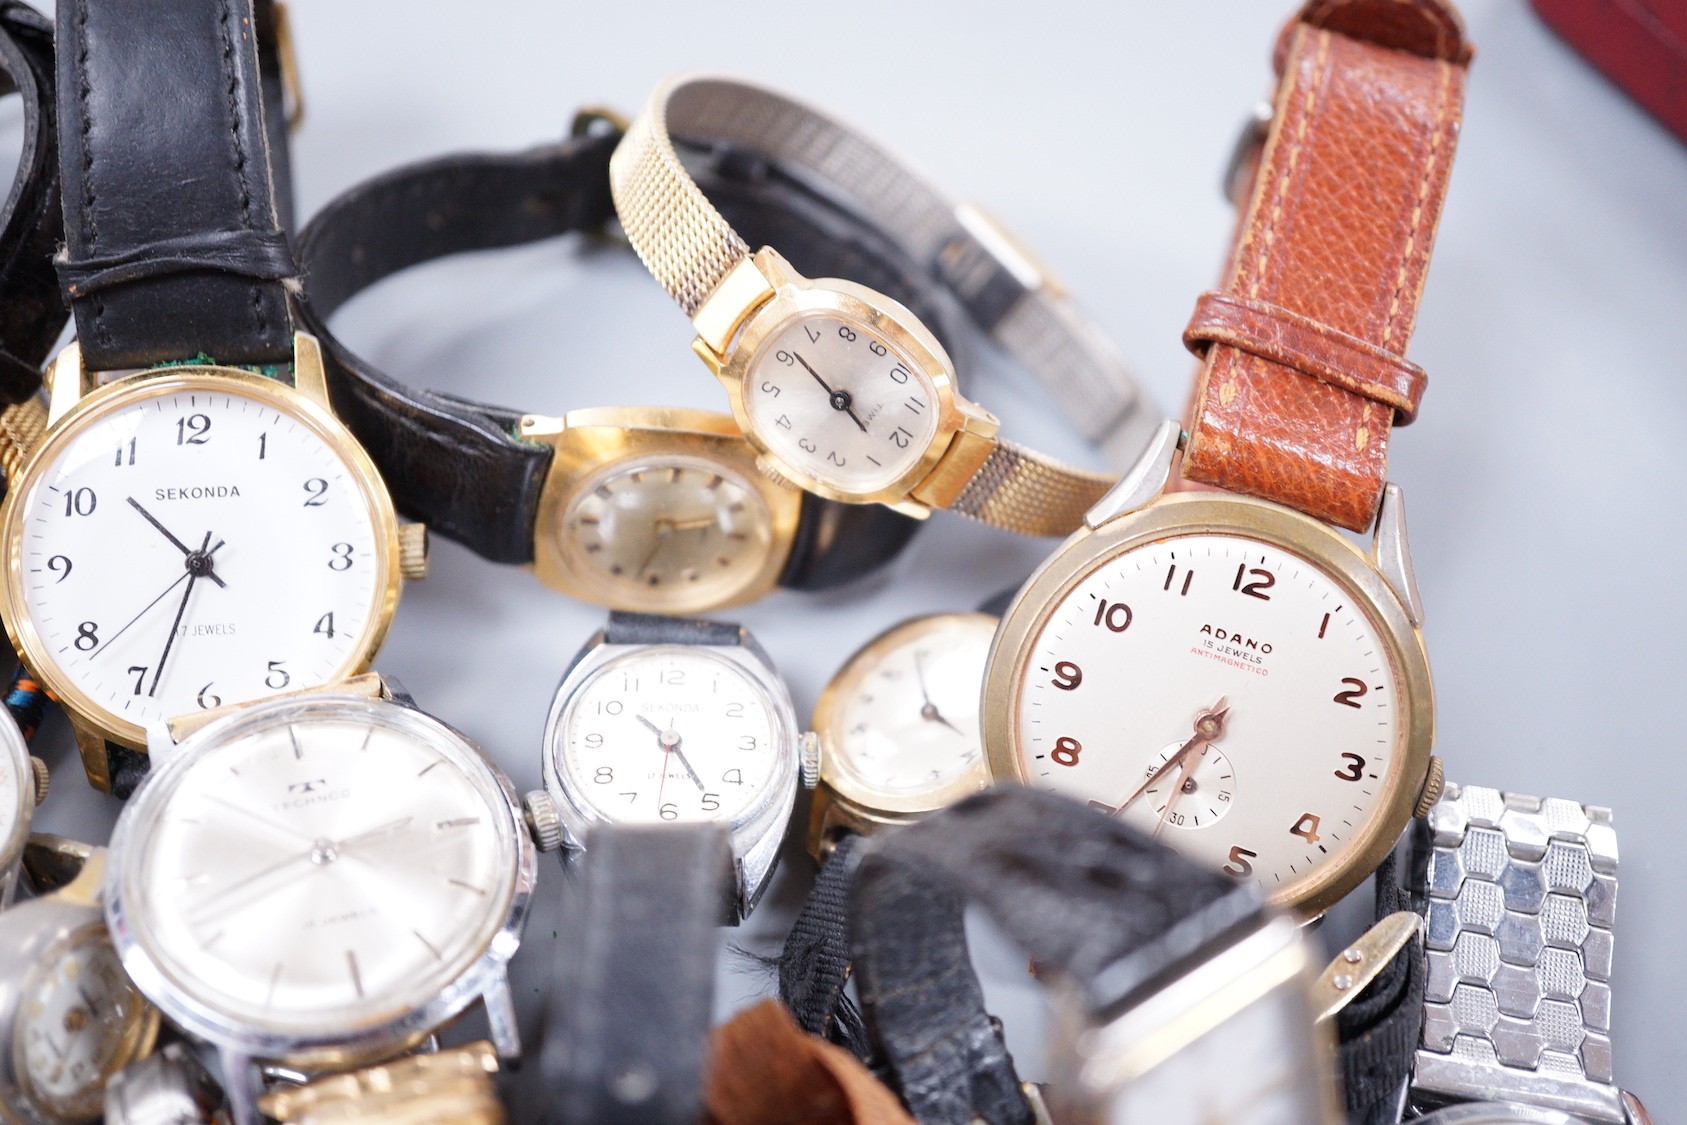 Seven assorted gentleman's wrist watches including steel Ingersoll and steel Technics, Adano and Sekonda and twelve assorted lady's wrist watches including Timex, Editia and a yellow metal Winegartens.